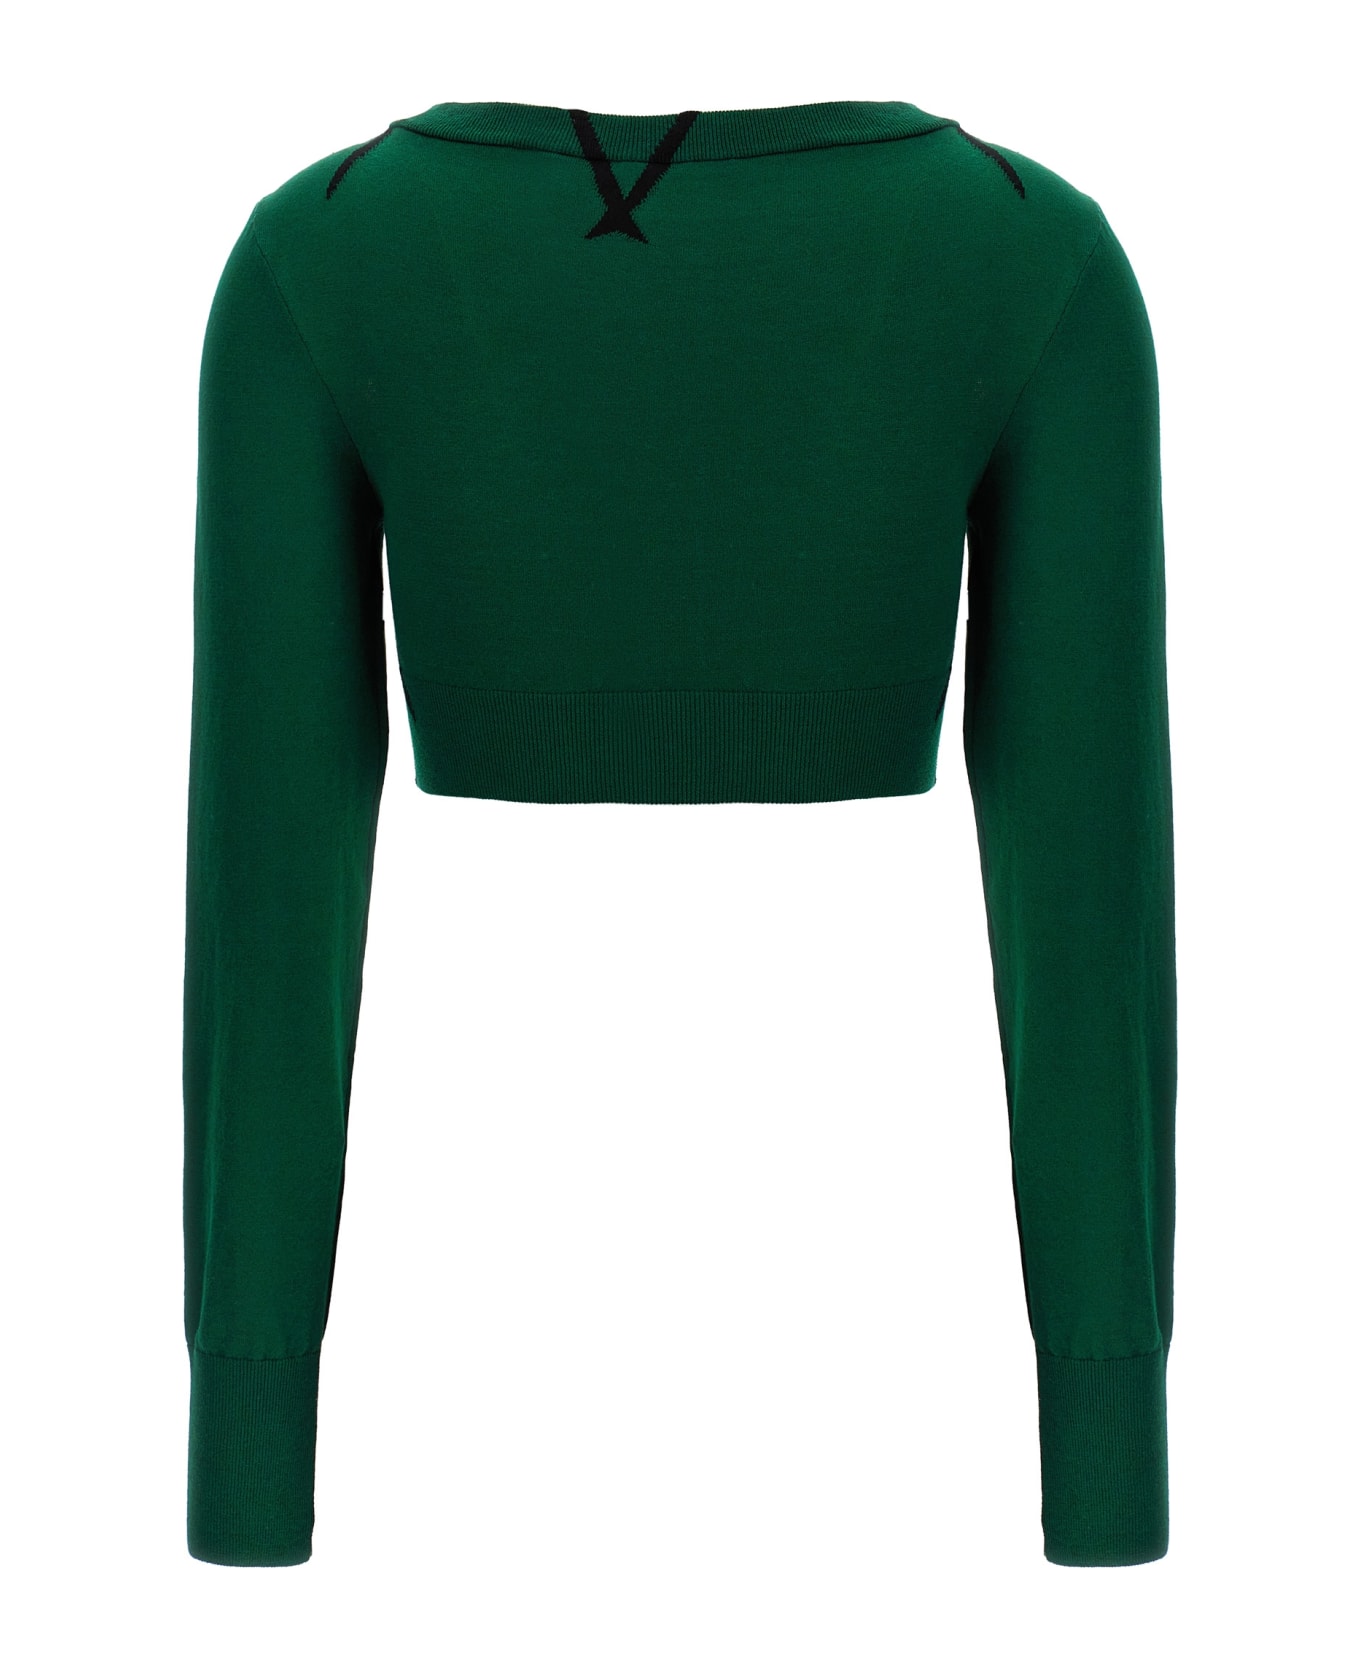 Burberry Argyle Pattern Sweater - Green